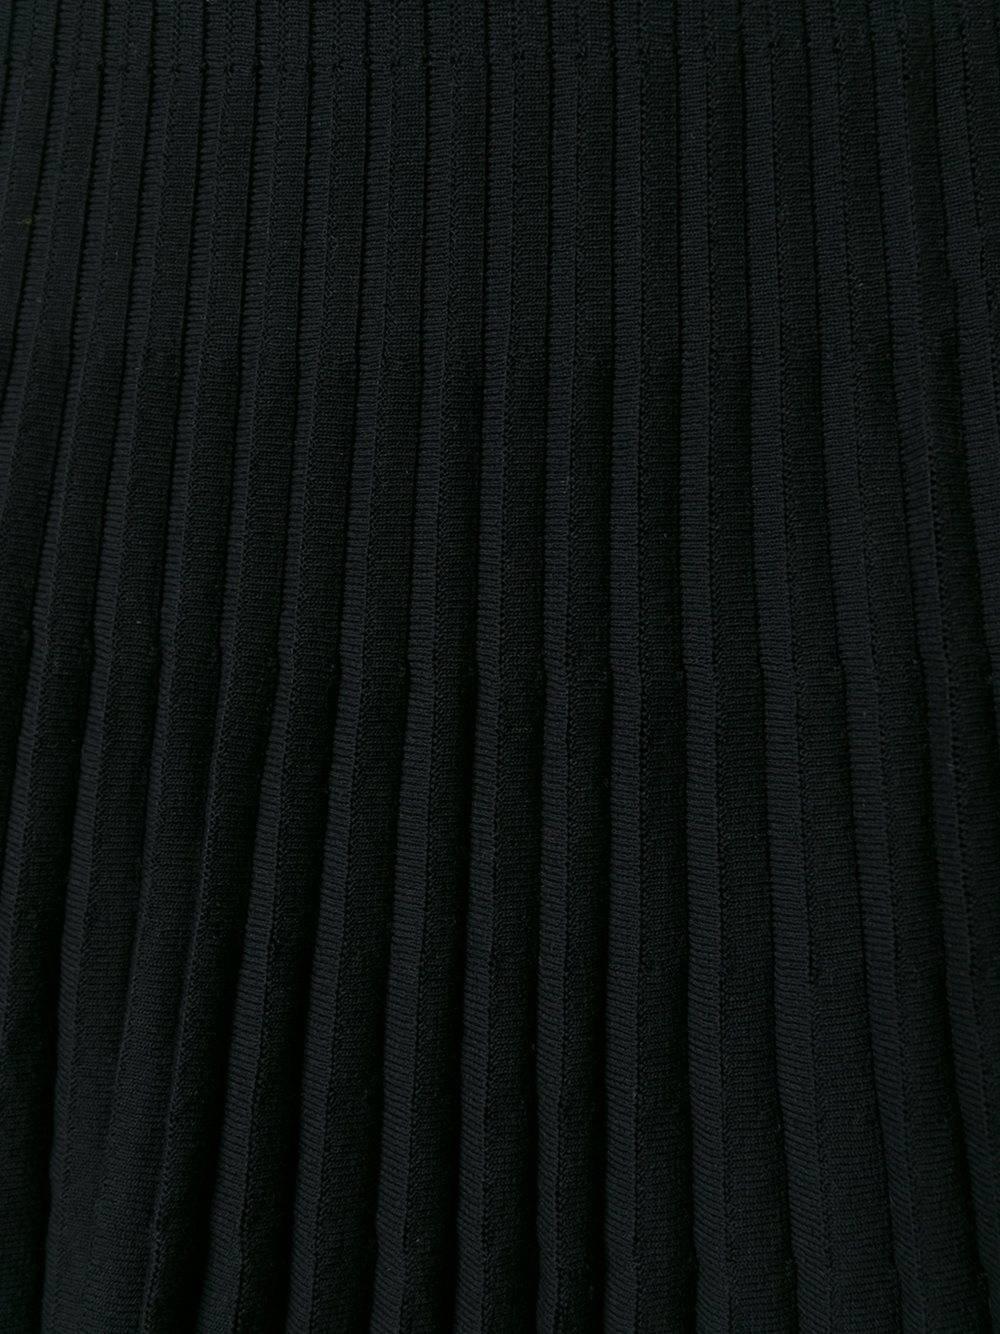 Christian Dior black stretch cotton blend ribbed A-line skirt.

Colour: Black

Size: FR 38

Materials: Spandex/Elastane 10% / Polyamide 13% / Viscose 90% / Cotton 87%

Measurements: hips: 90 centimetres, length: 60 centimetres, waist: 64